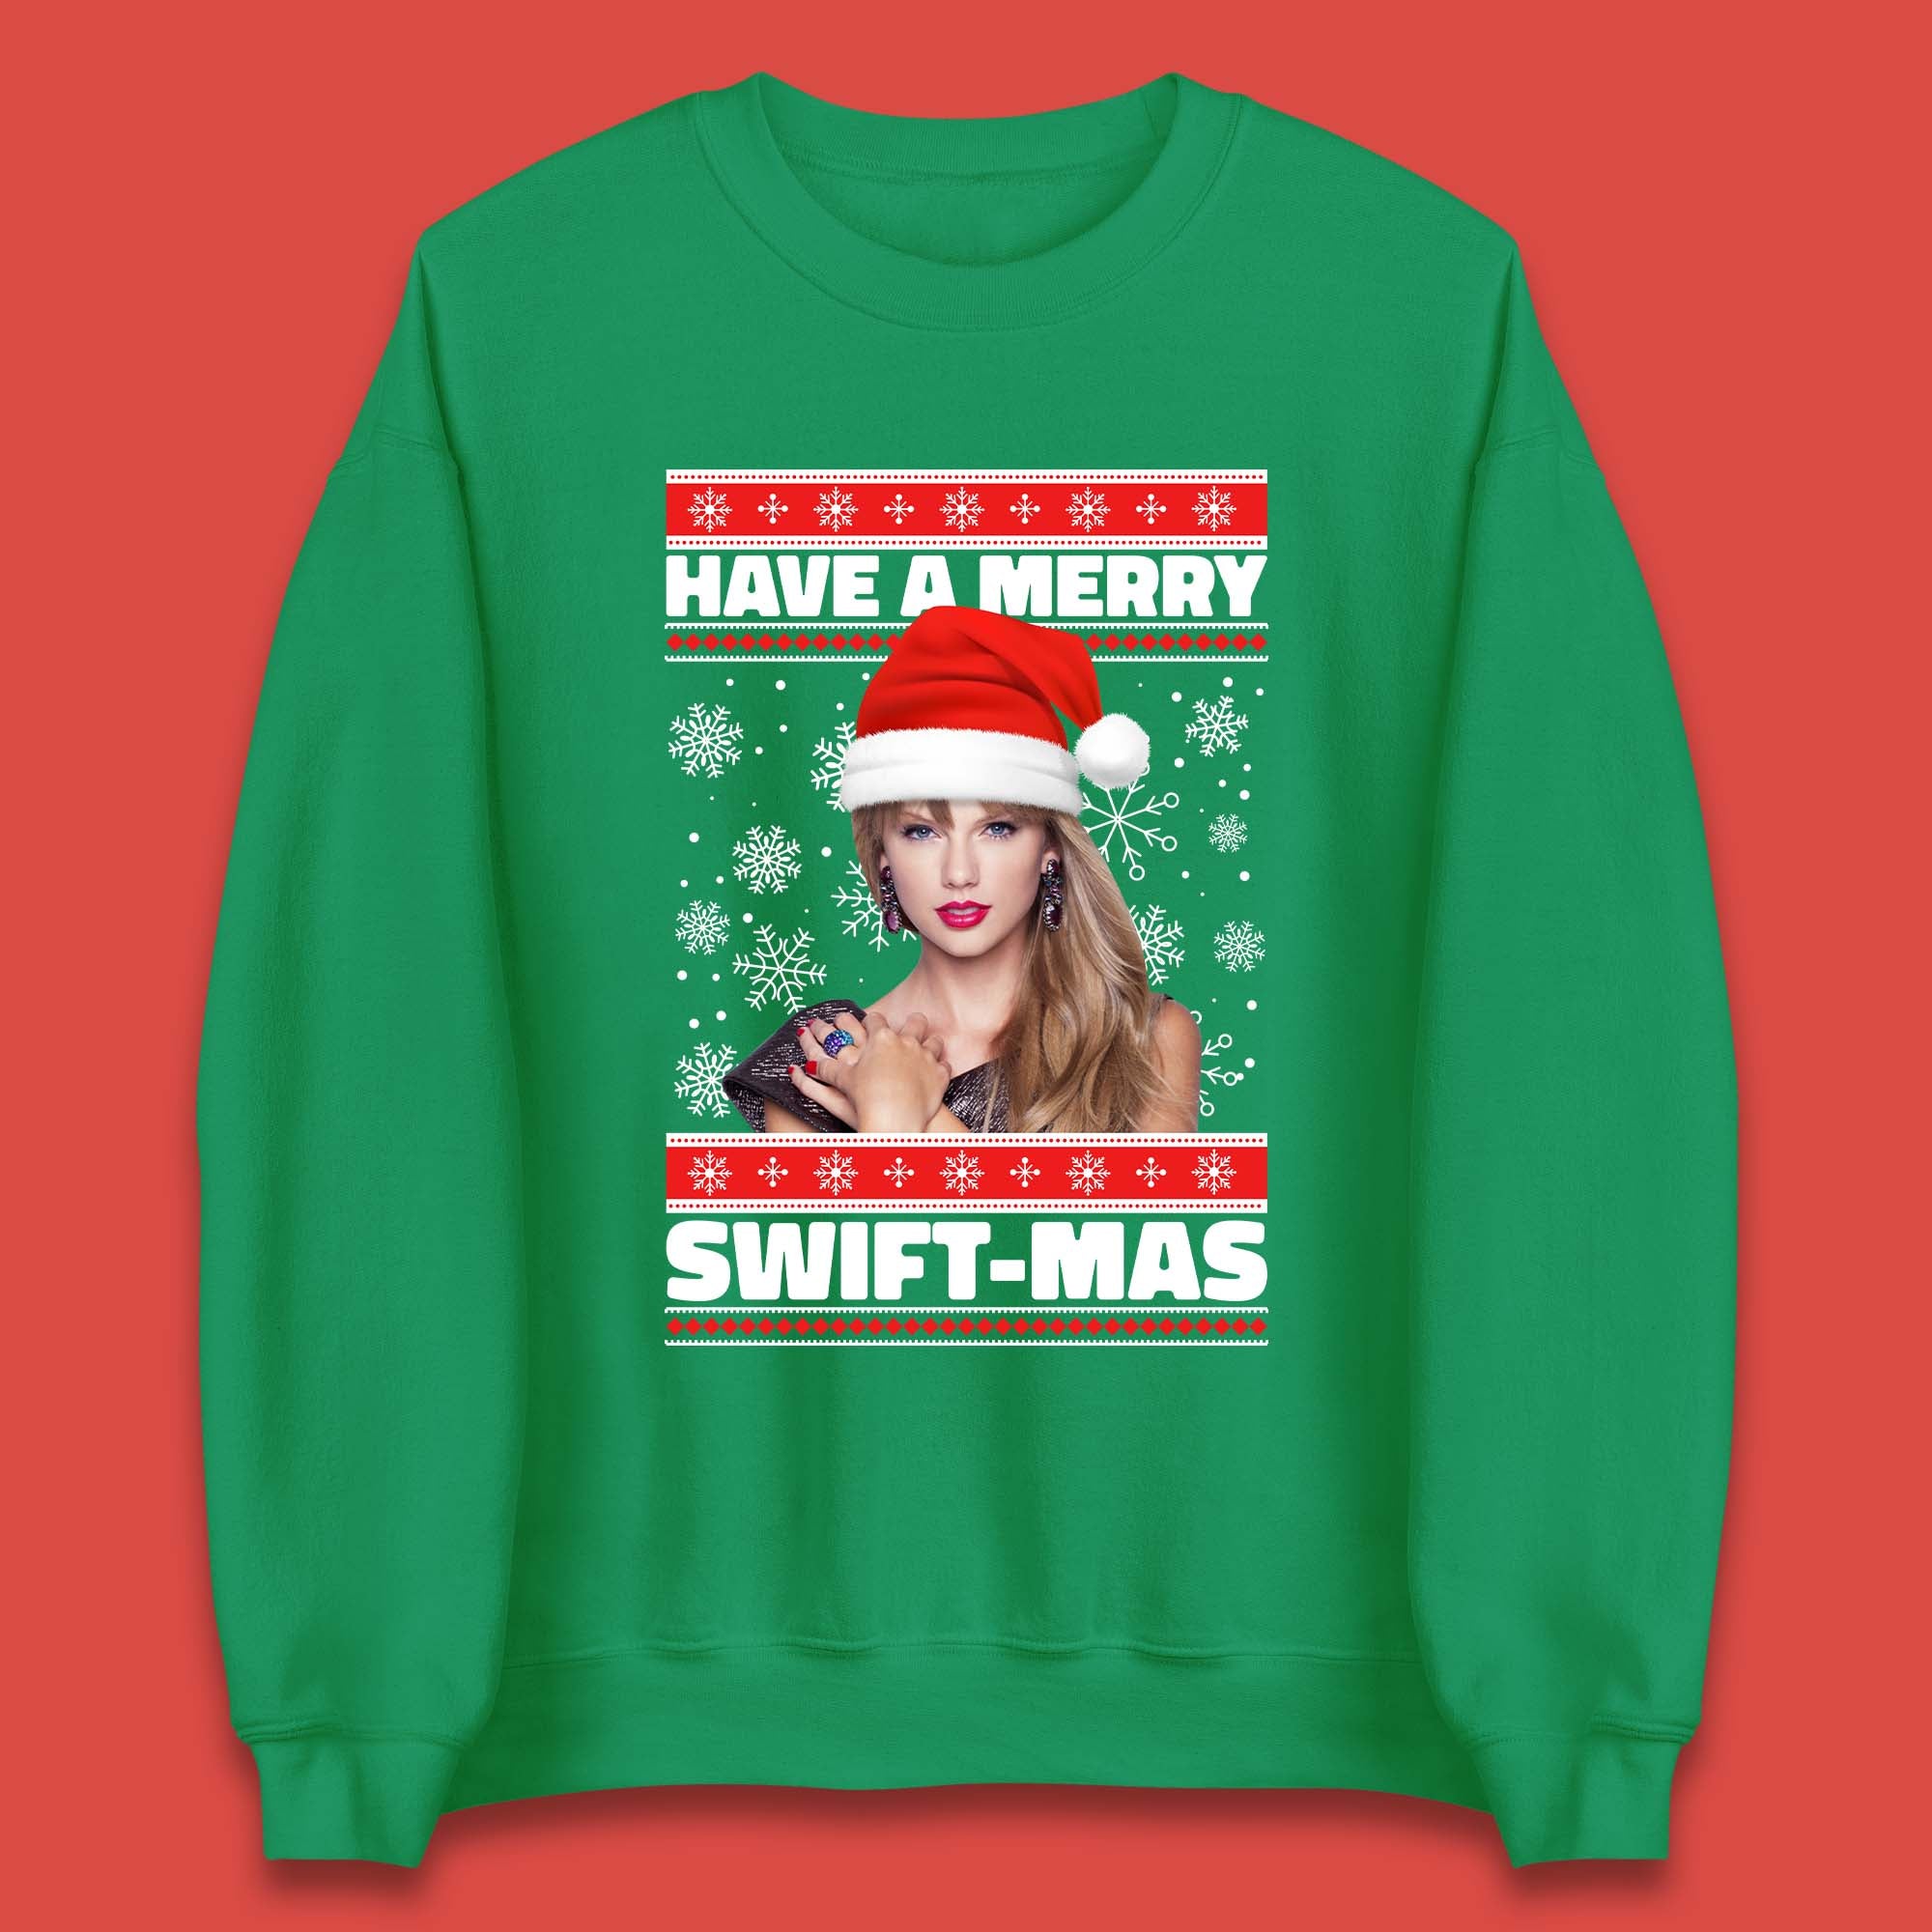 Taylor Swift Christmas Jumper UK